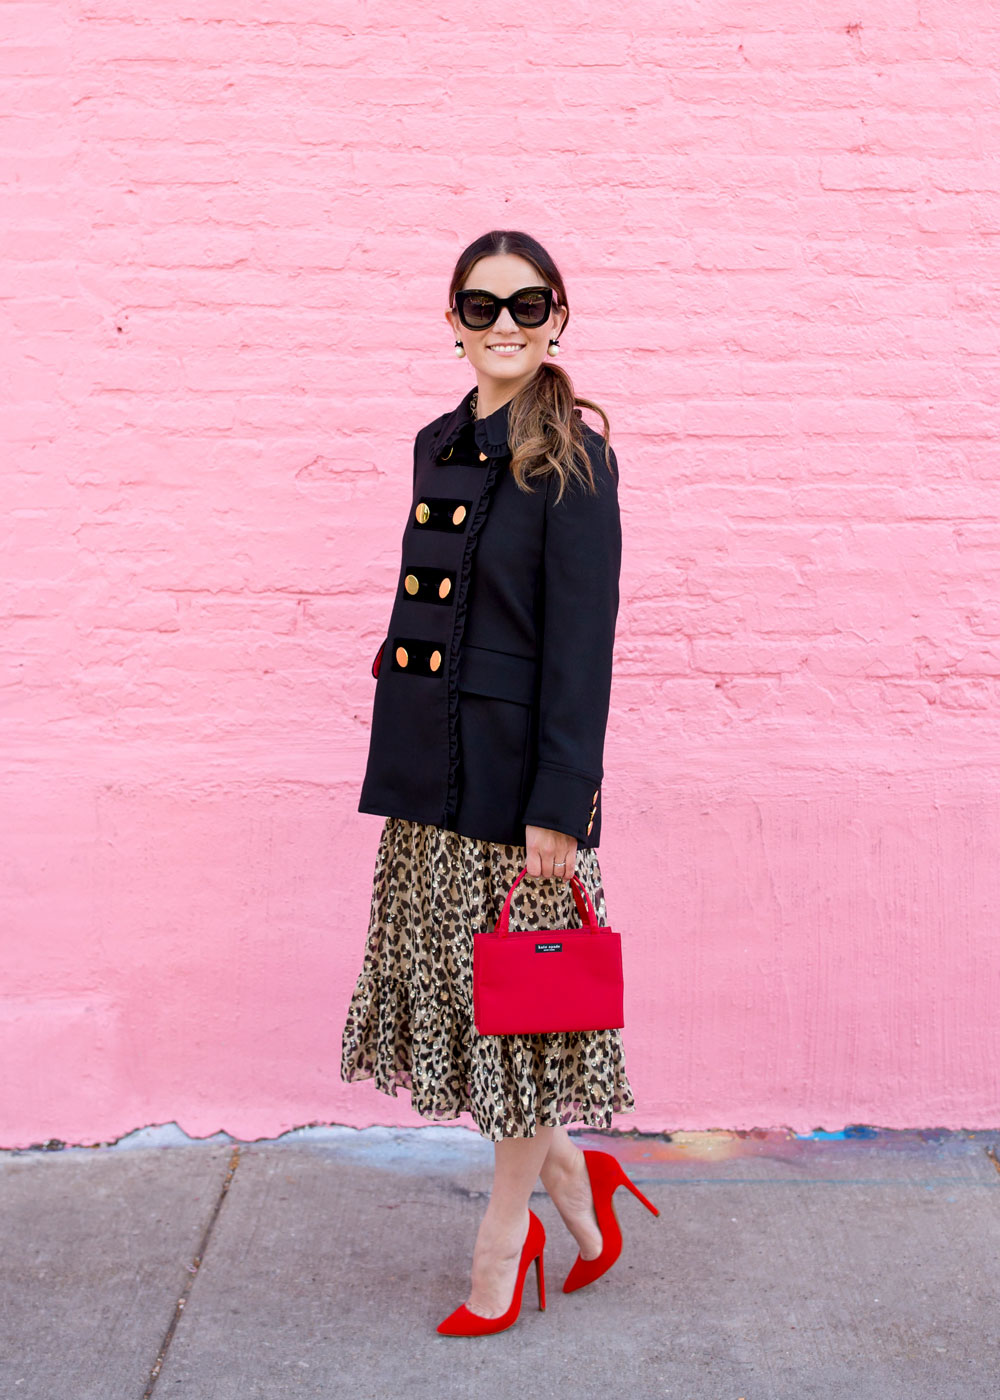 Kate Spade Leopard Dress Red Pumps